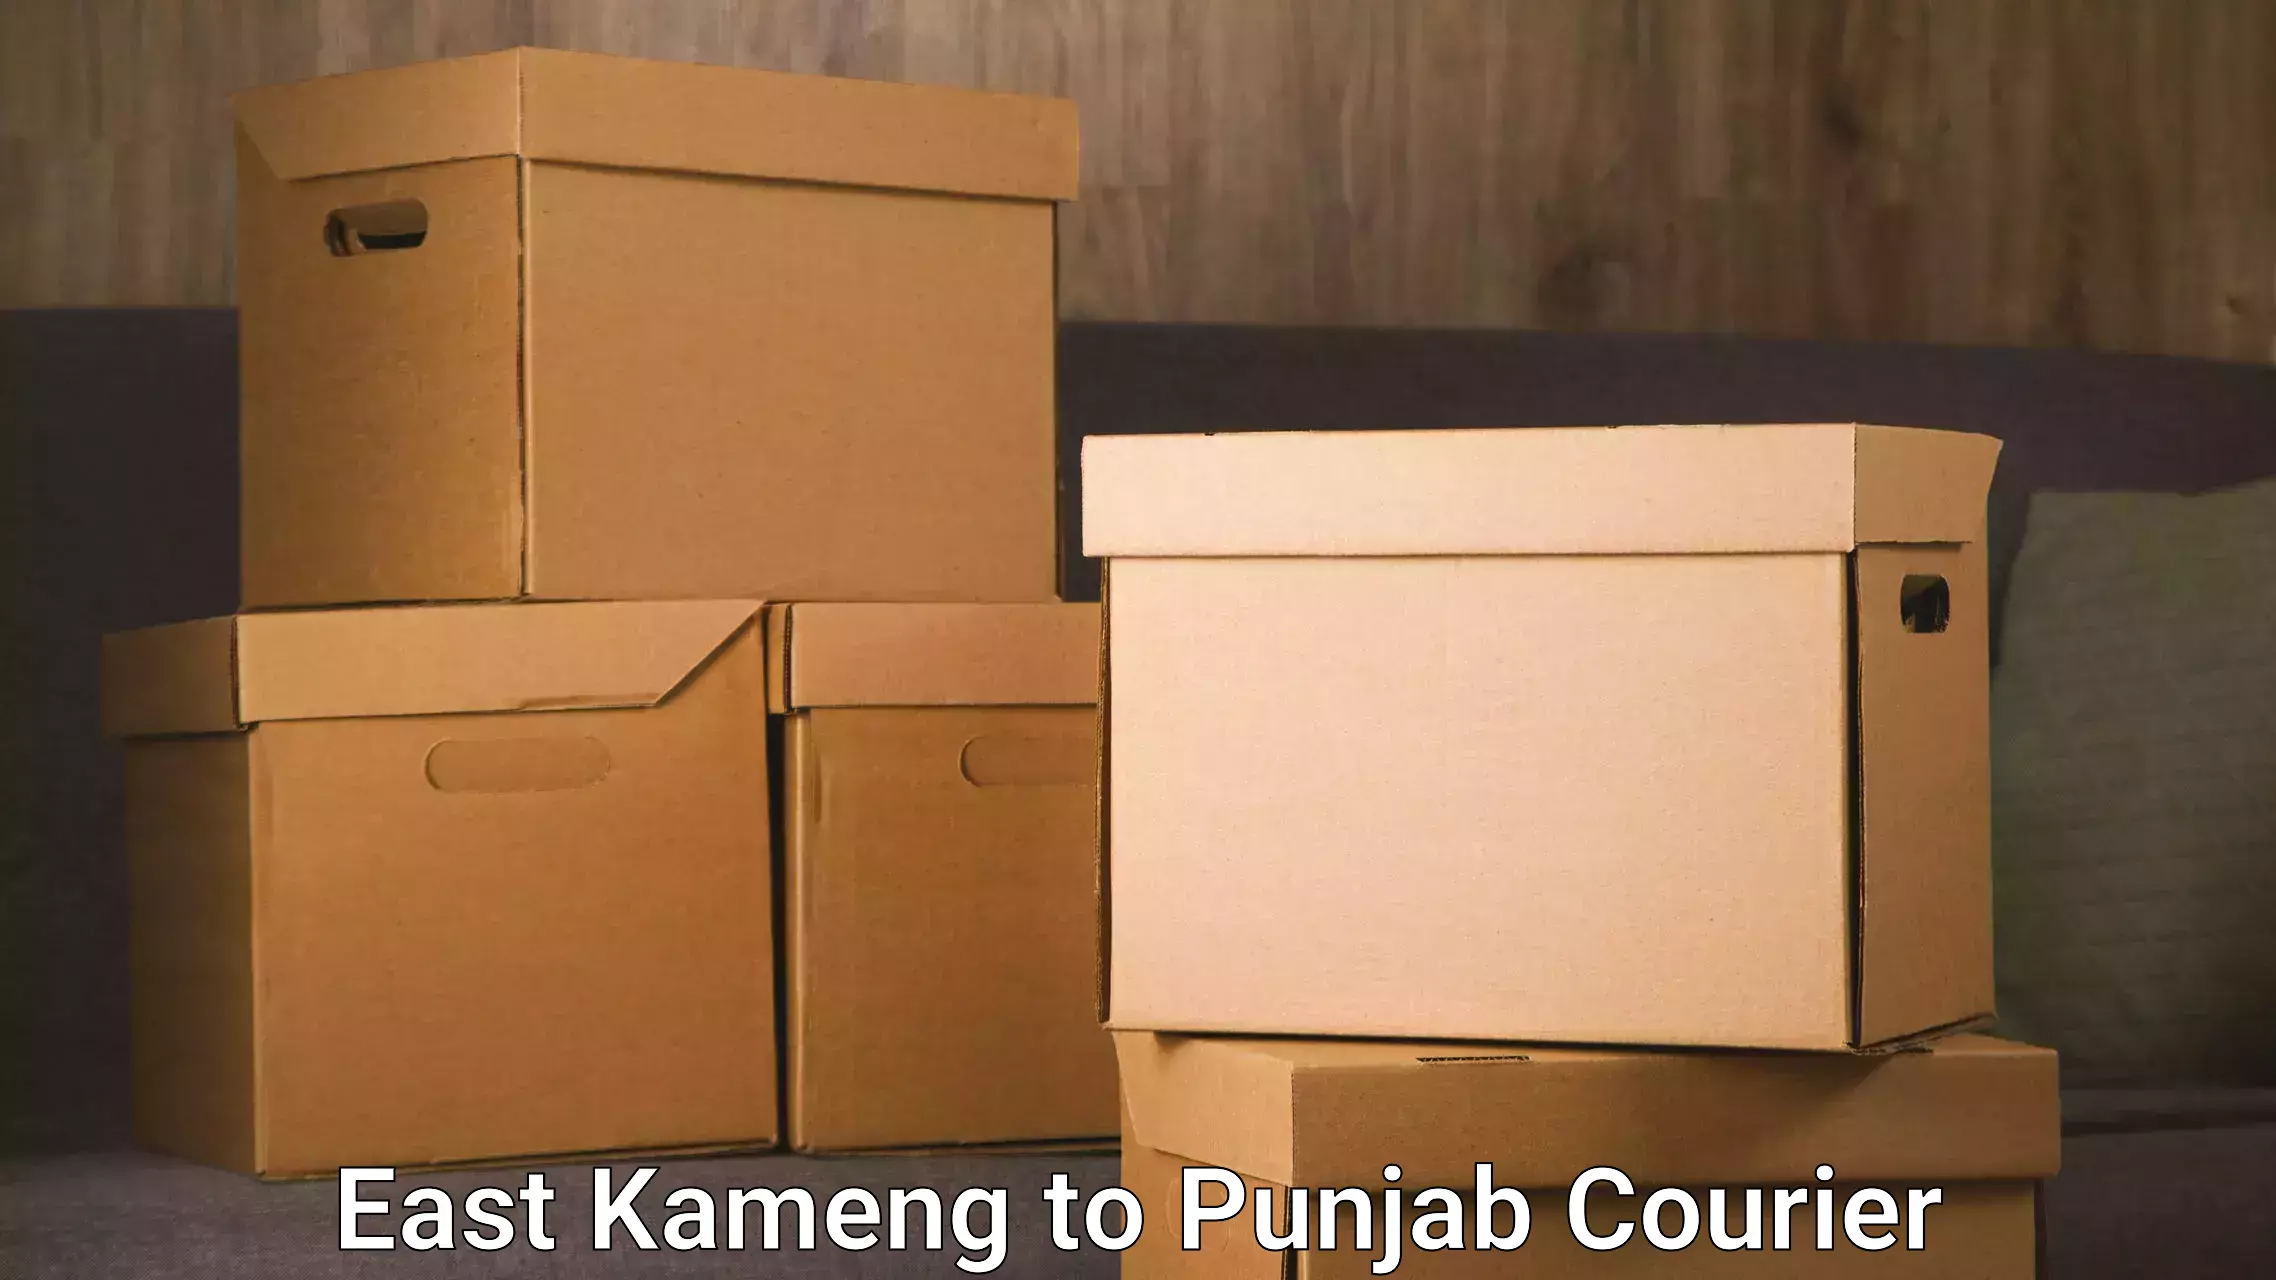 Courier service partnerships East Kameng to Garhshankar